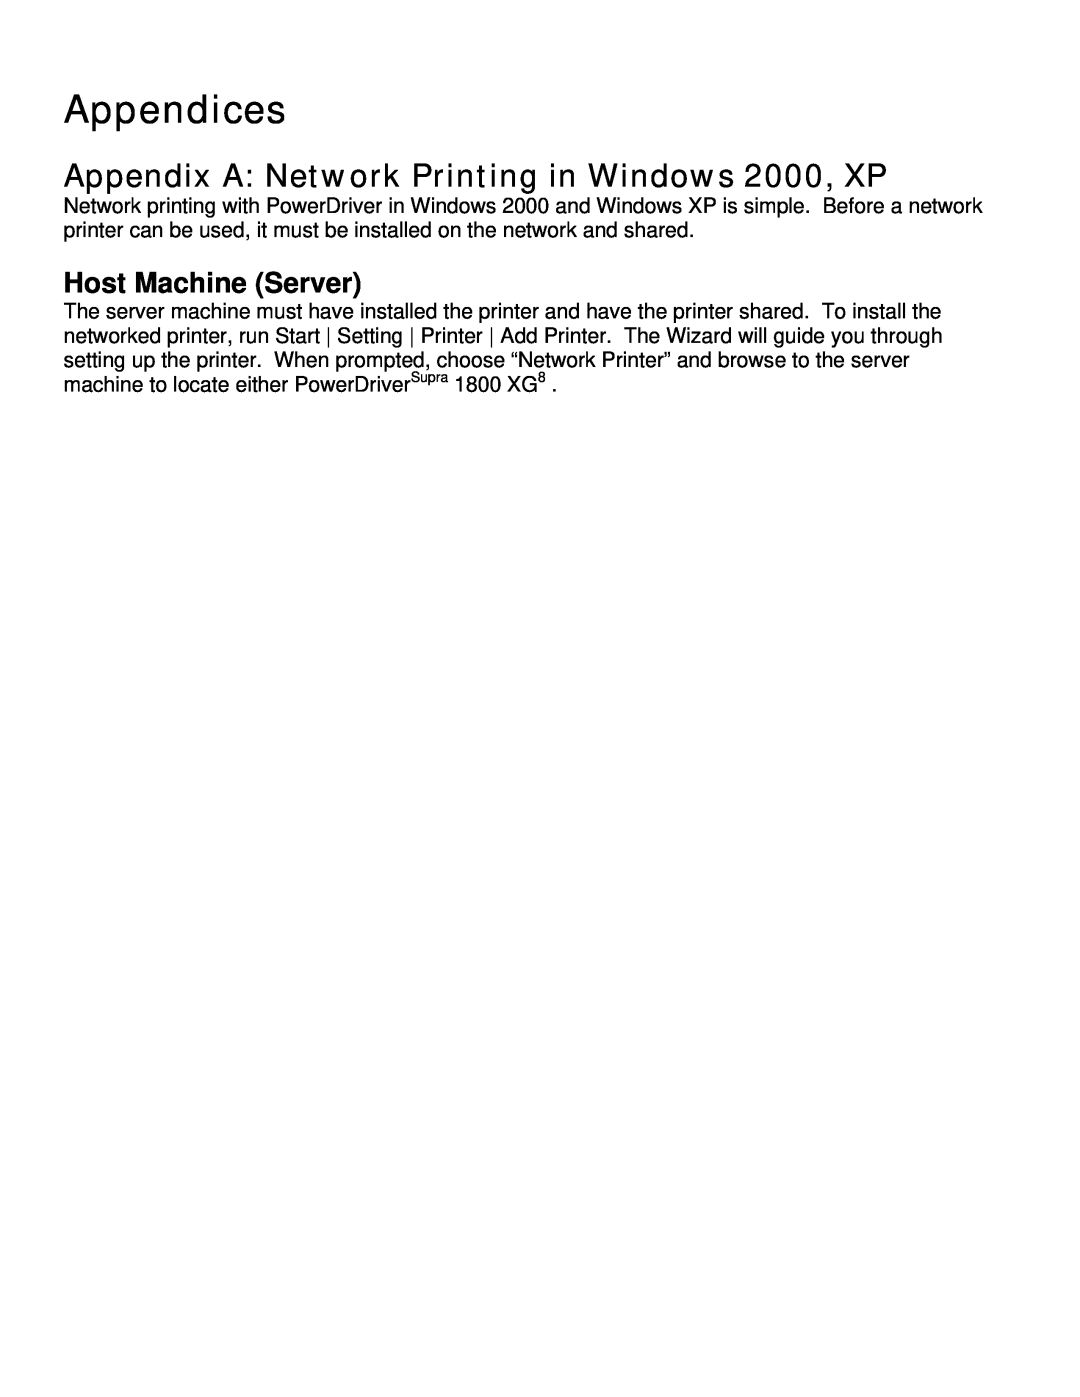 Epson R800, R1800 manual Appendices, Appendix A Network Printing in Windows 2000, XP, Host Machine Server 